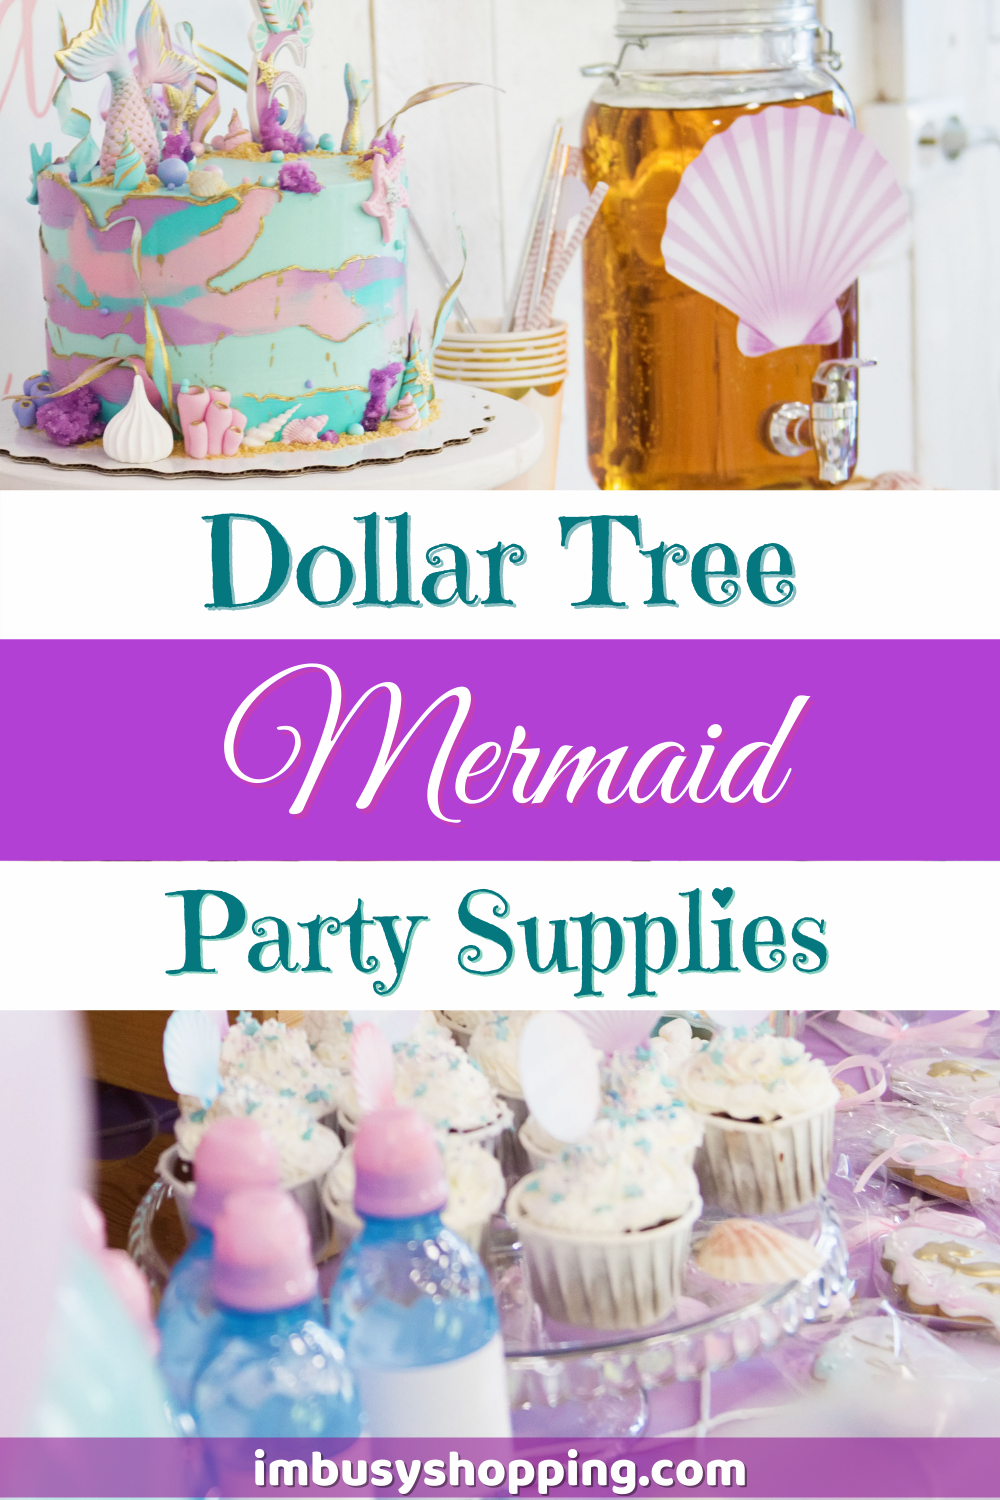 Pin showing Dollar Tree Mermaid Party Supplies